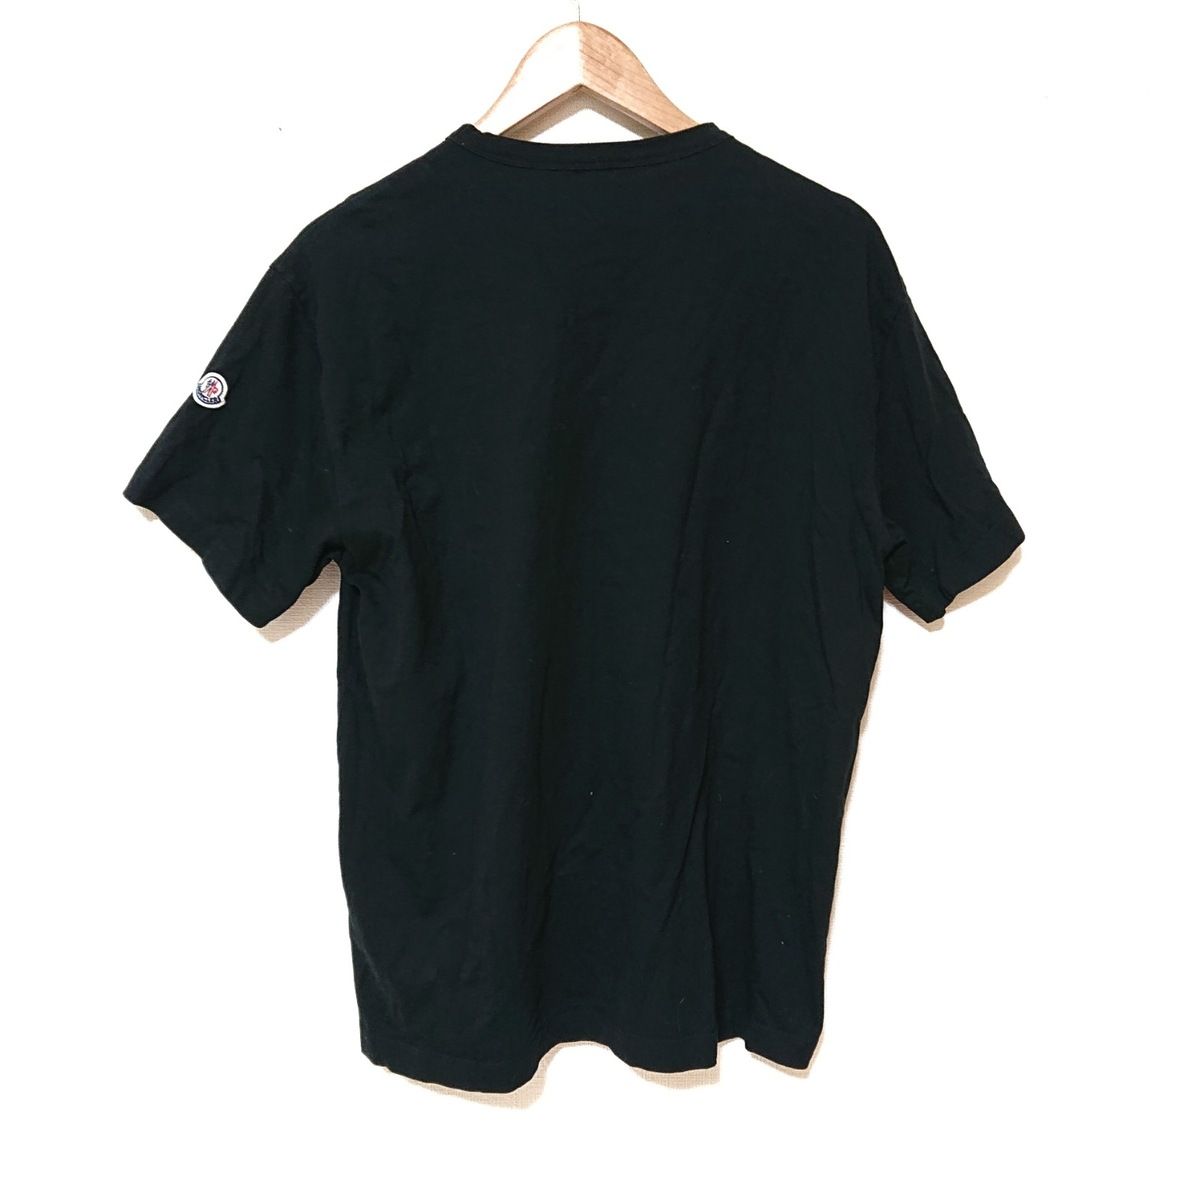 MONCLER(モンクレール) 半袖Tシャツ サイズL メンズ - 黒×イエロー クルーネック - メルカリ